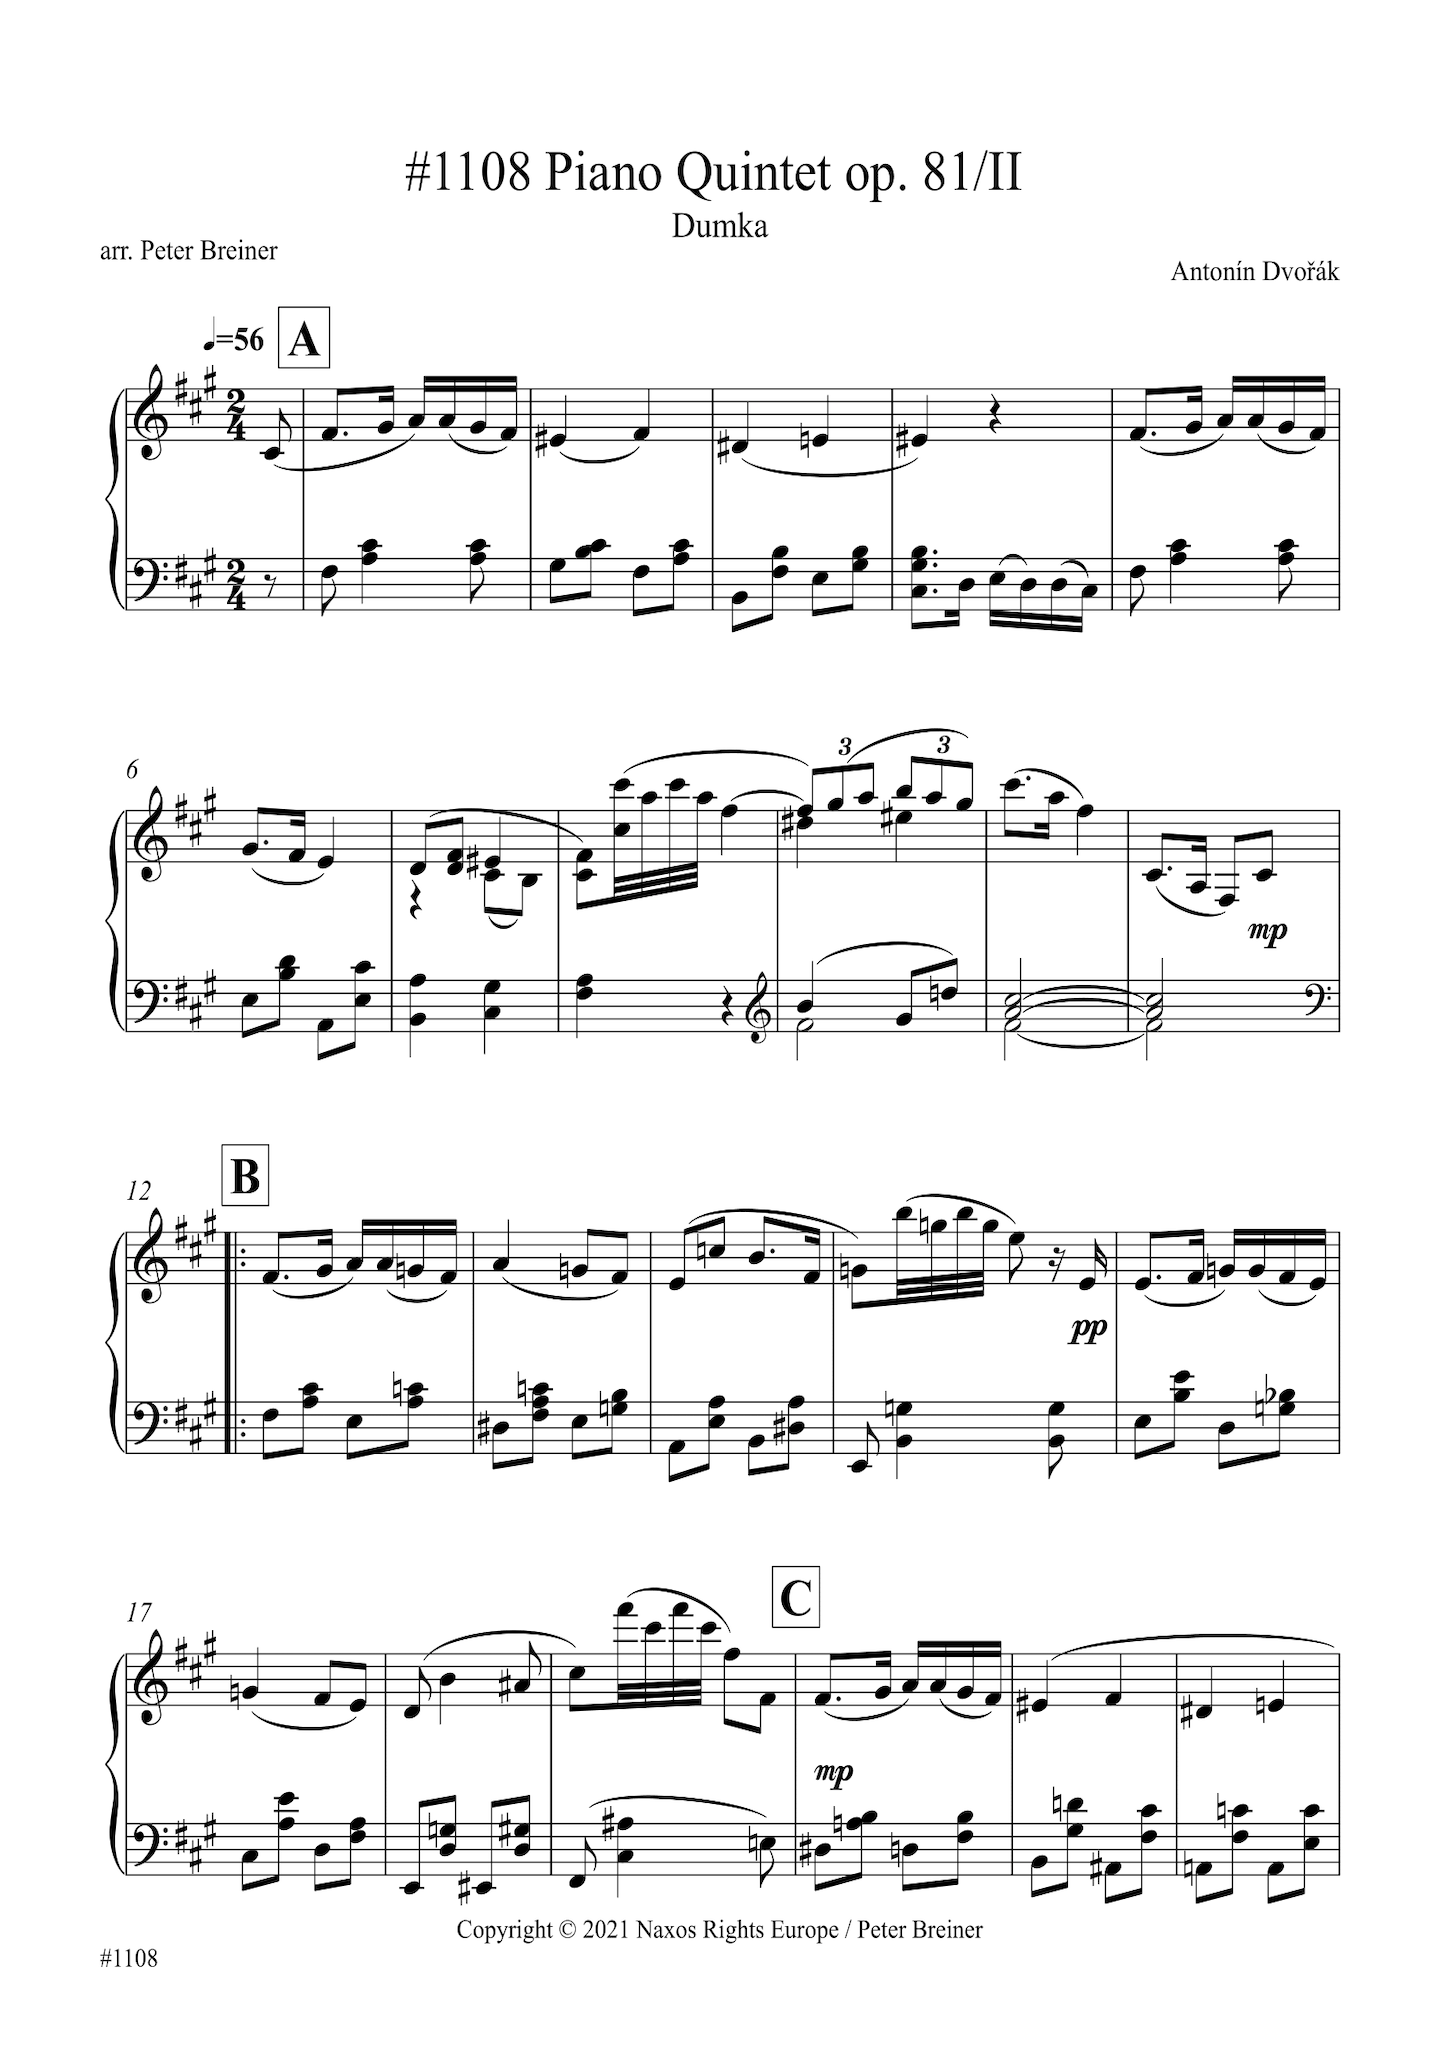 Antonín Dvořák: Dumka, from Piano Quintet in A Major (arranged for piano by Peter Breiner) (PB151)